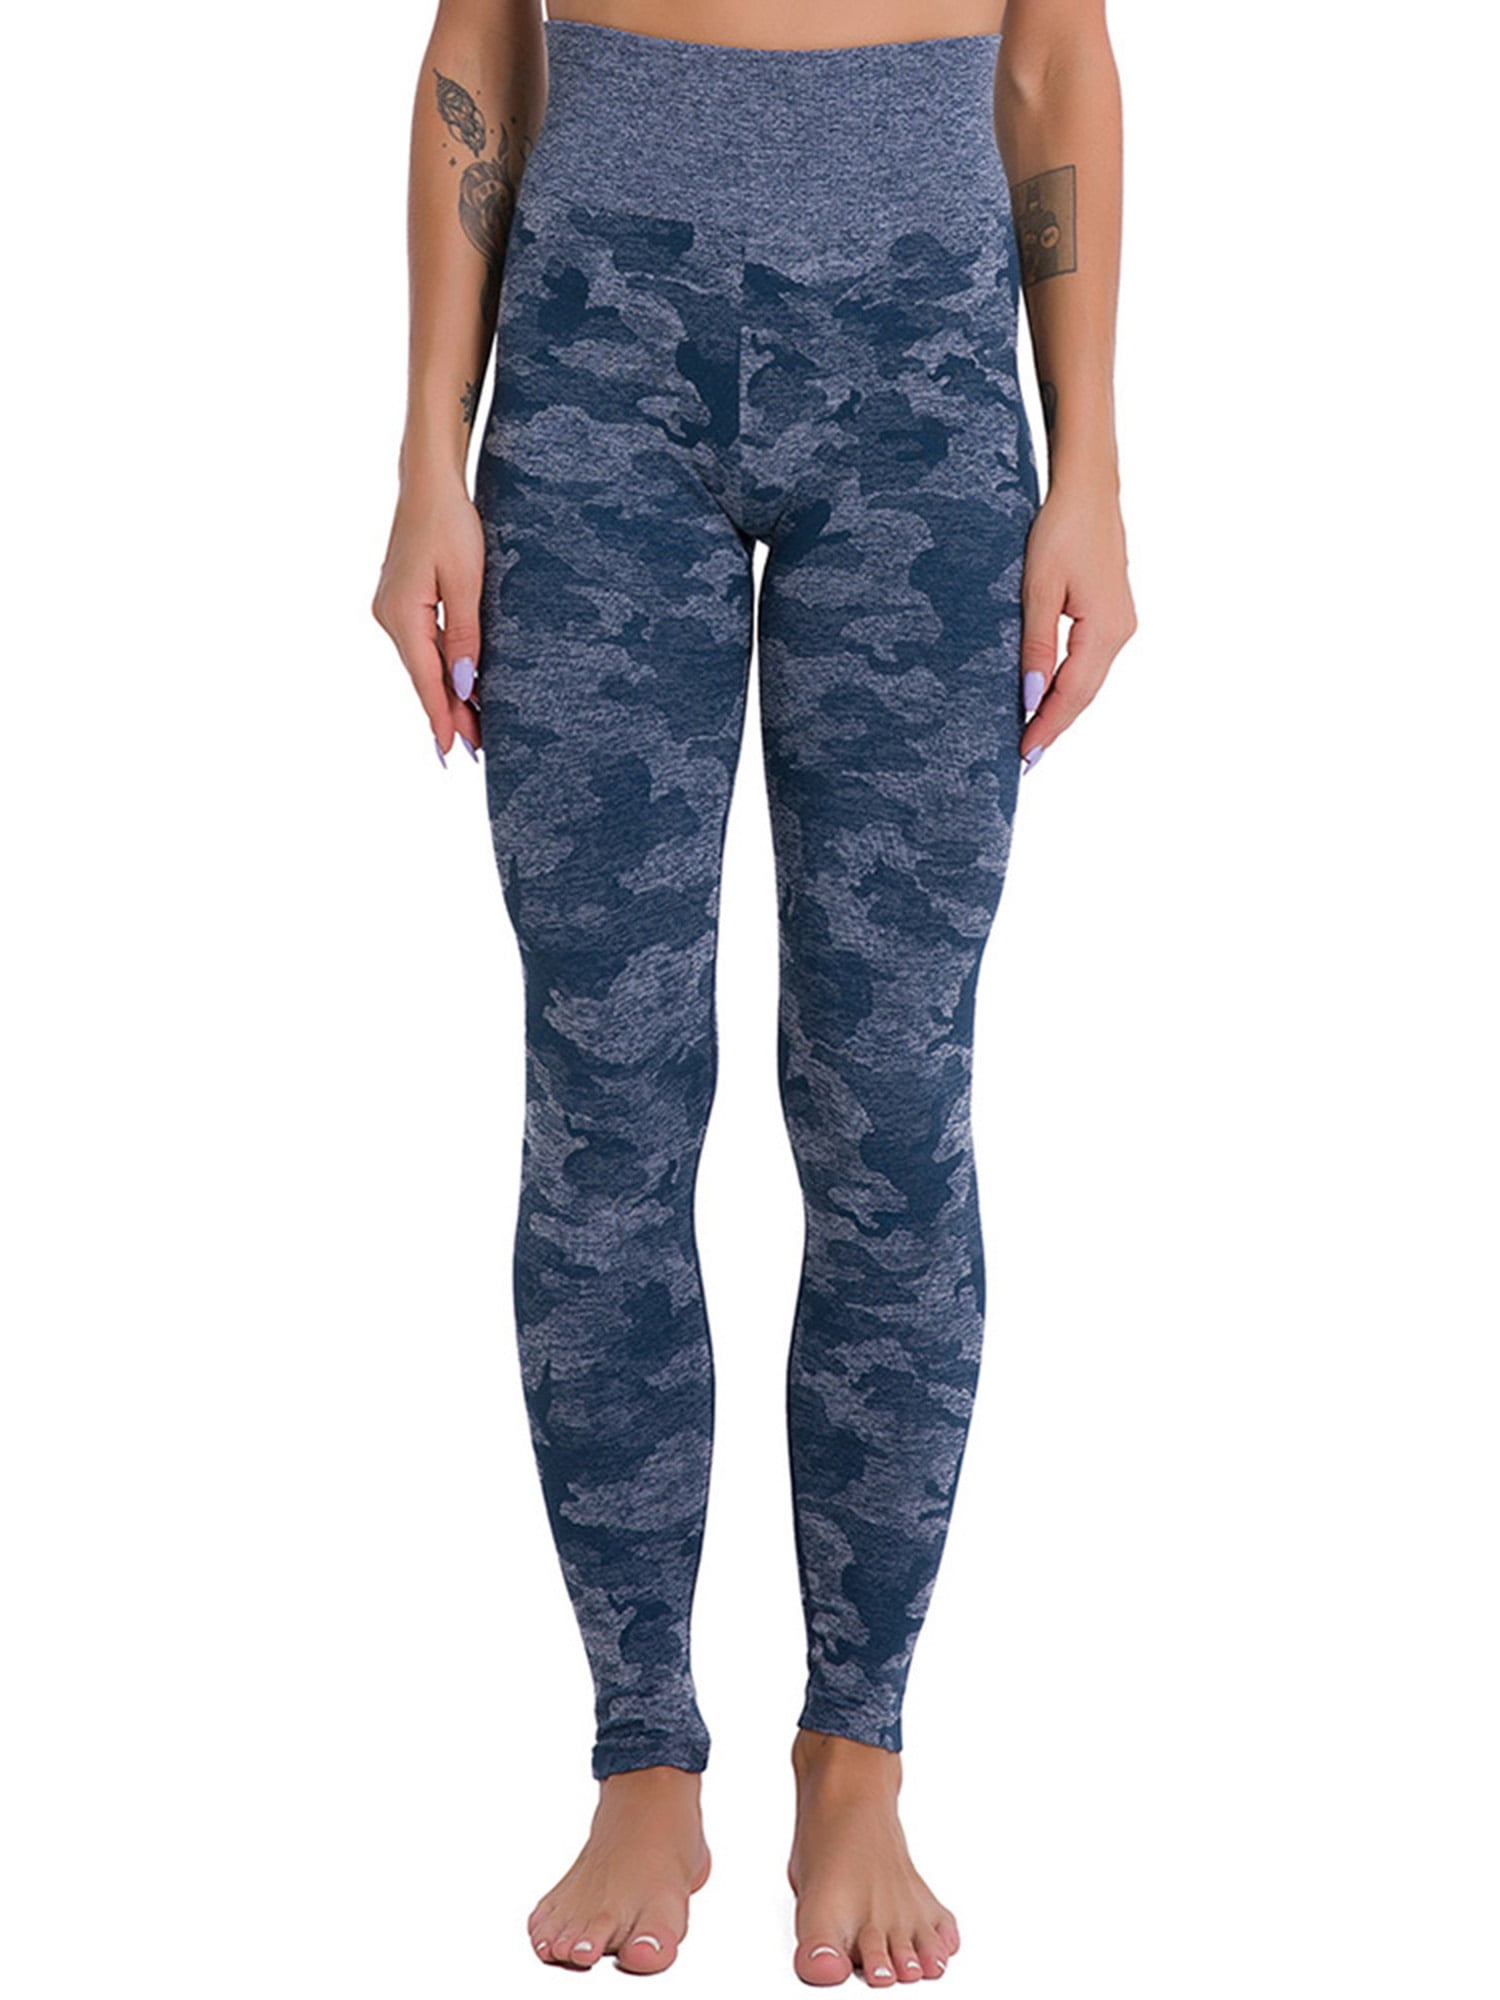 Women's Camouflage High Waist Elastic Pants Yoga Leggings Gym Sports Trousers 